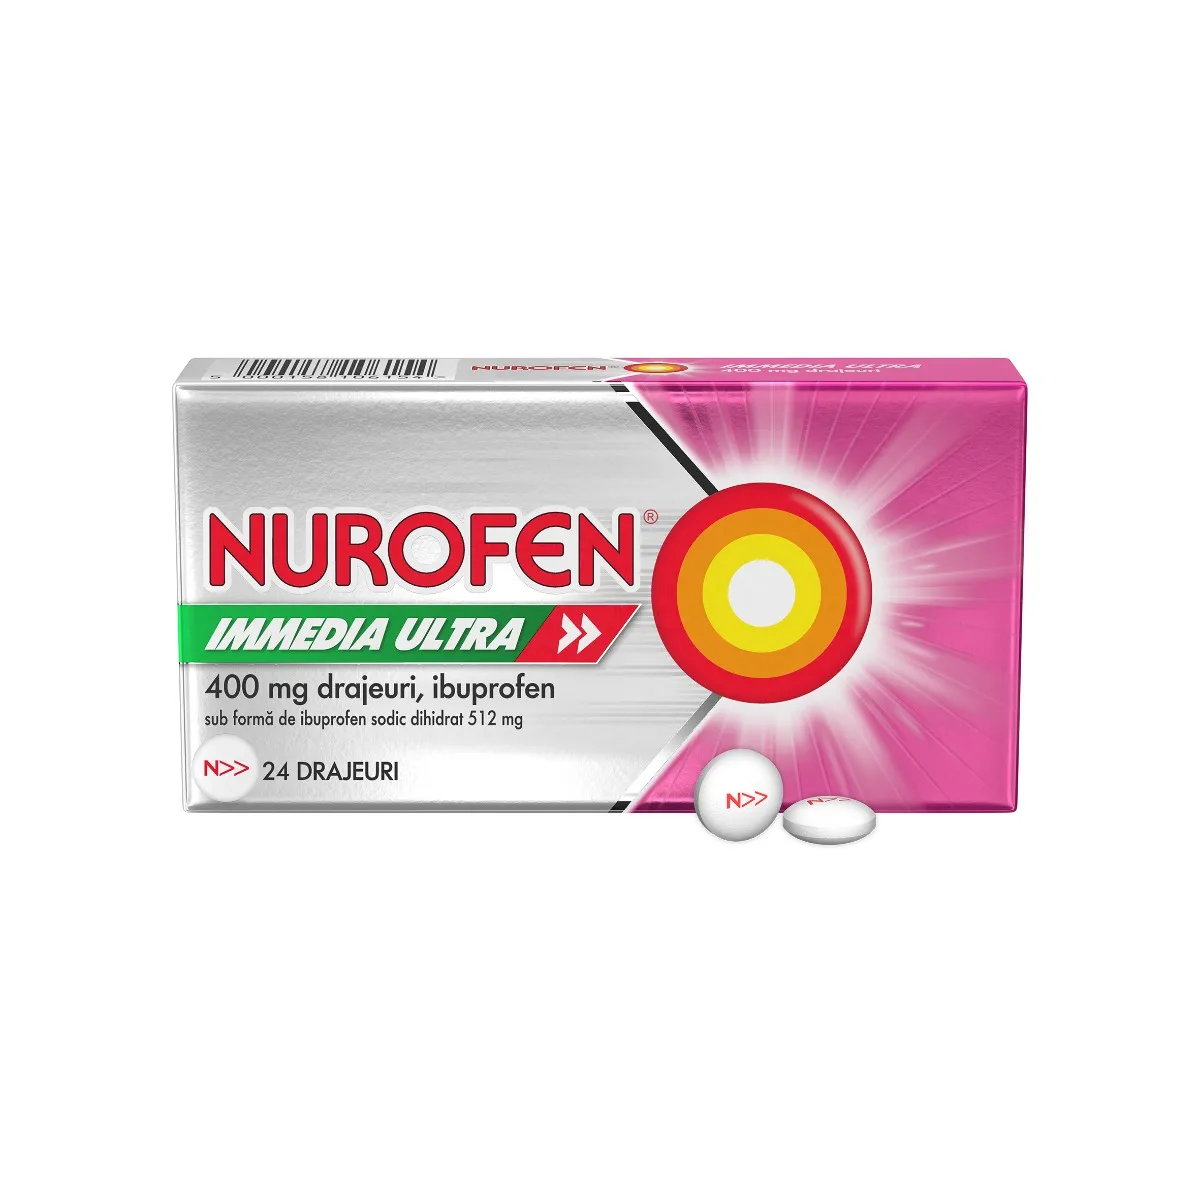 Nurofen Immedia Ultra 400 mg, 24 drajeuri, Reckitt Benckiser